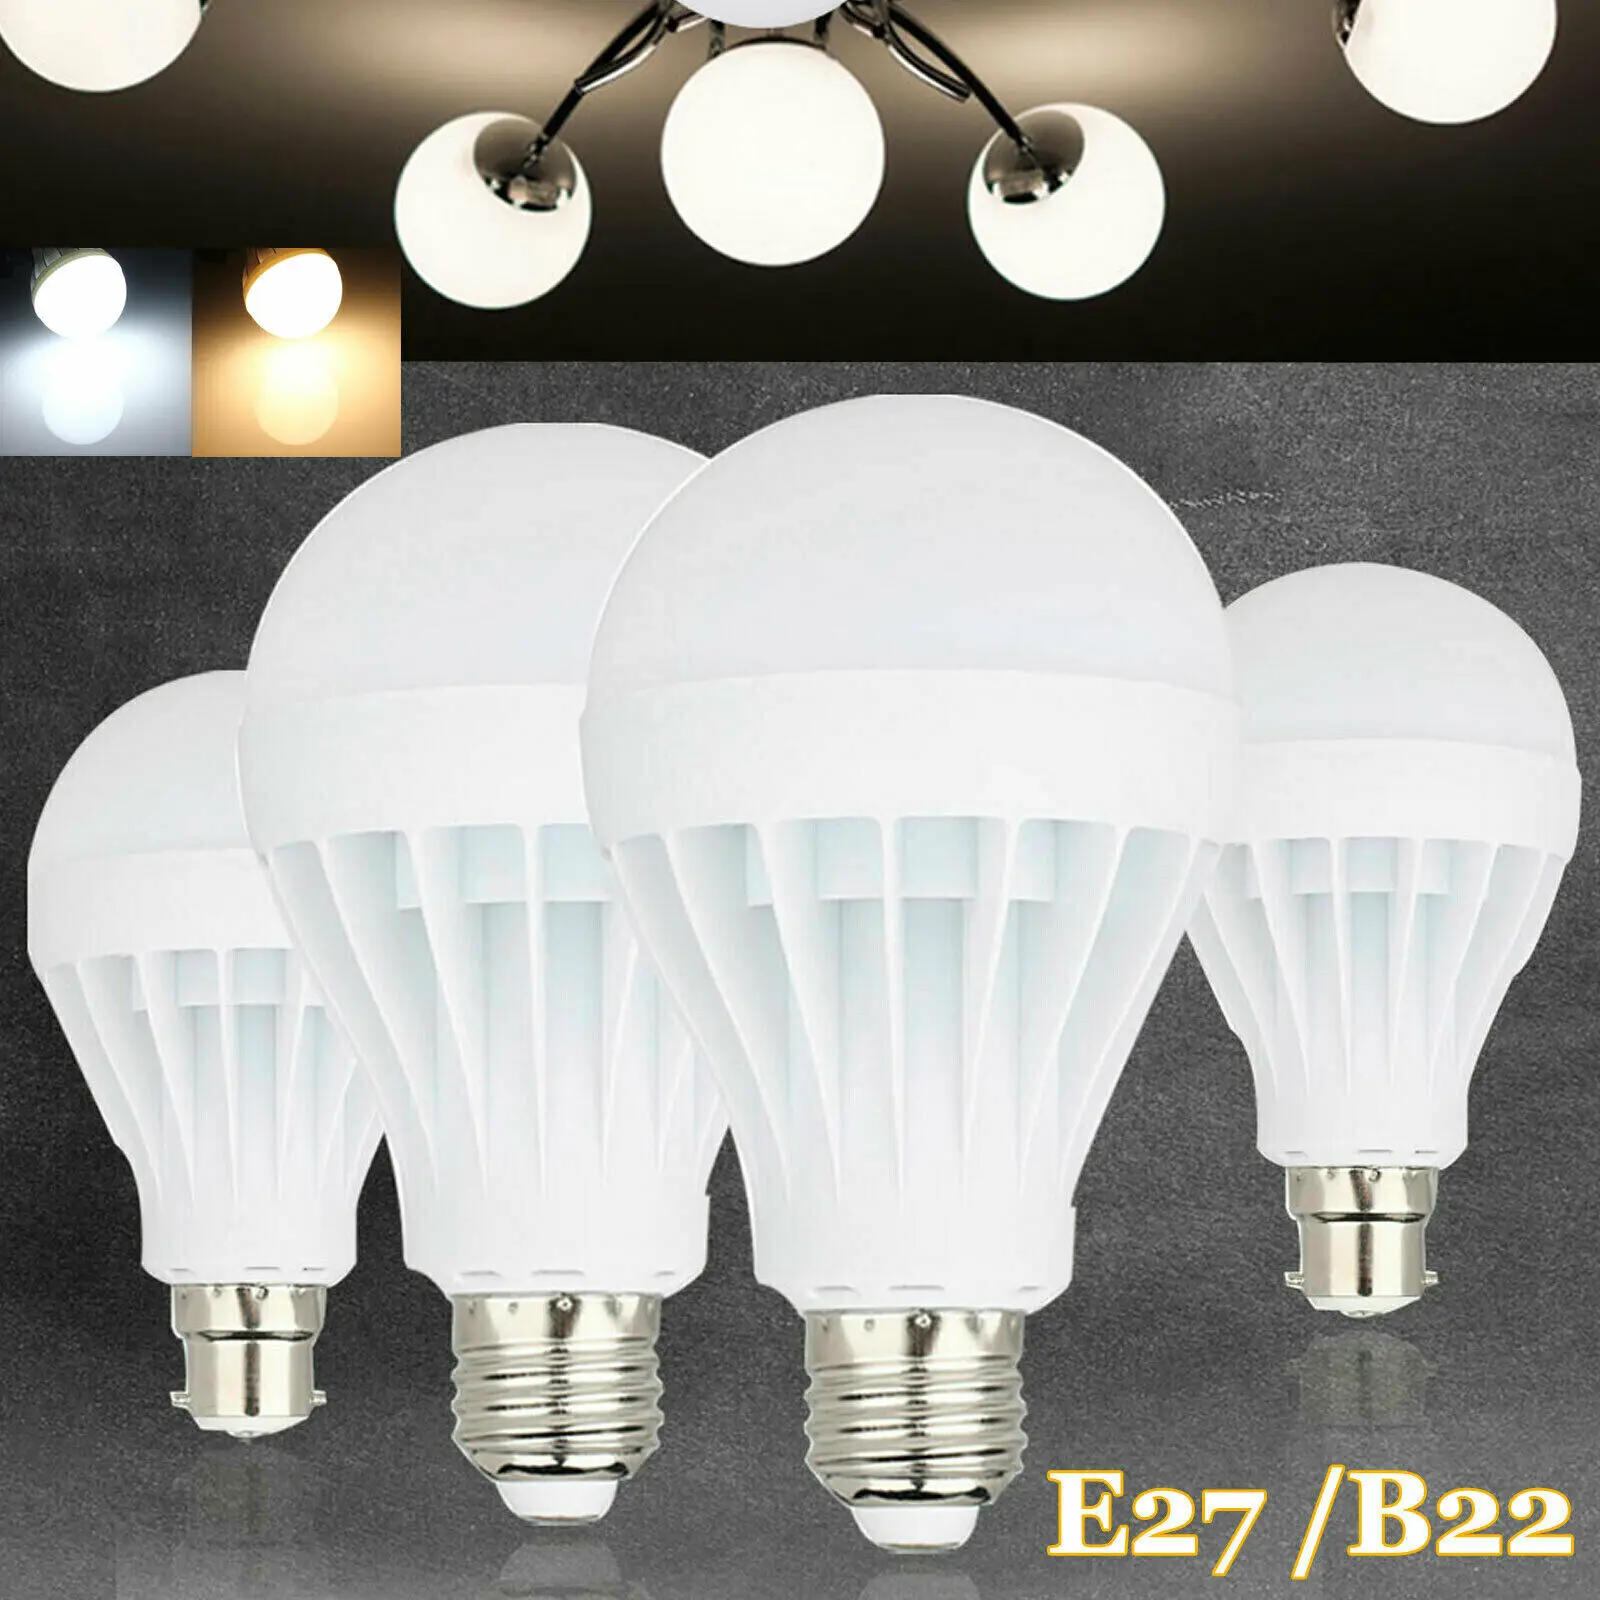 

3W 7W 9W 12W LED Globe Bulb Light B22 BC E27 ES For Chandeliers Energy Saving Light Bombillas Replace Halogen Lamps 110V 220V